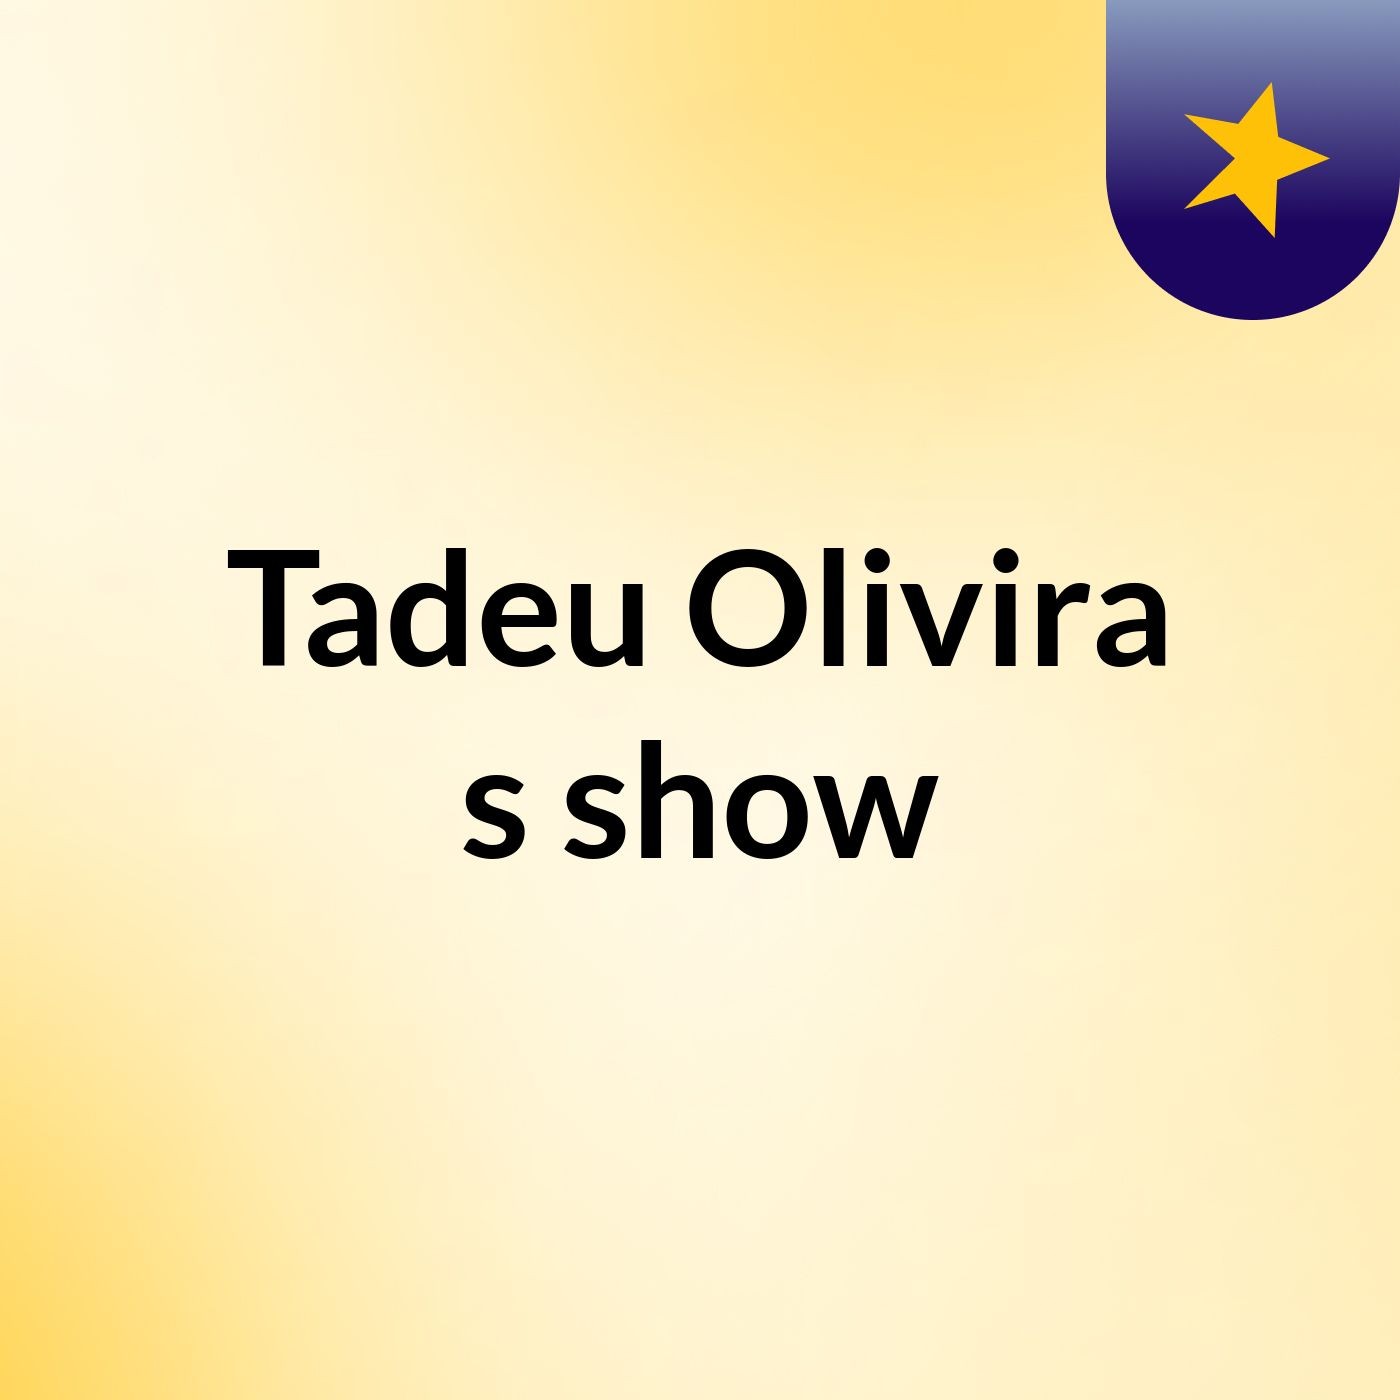 Tadeu Olivira's show